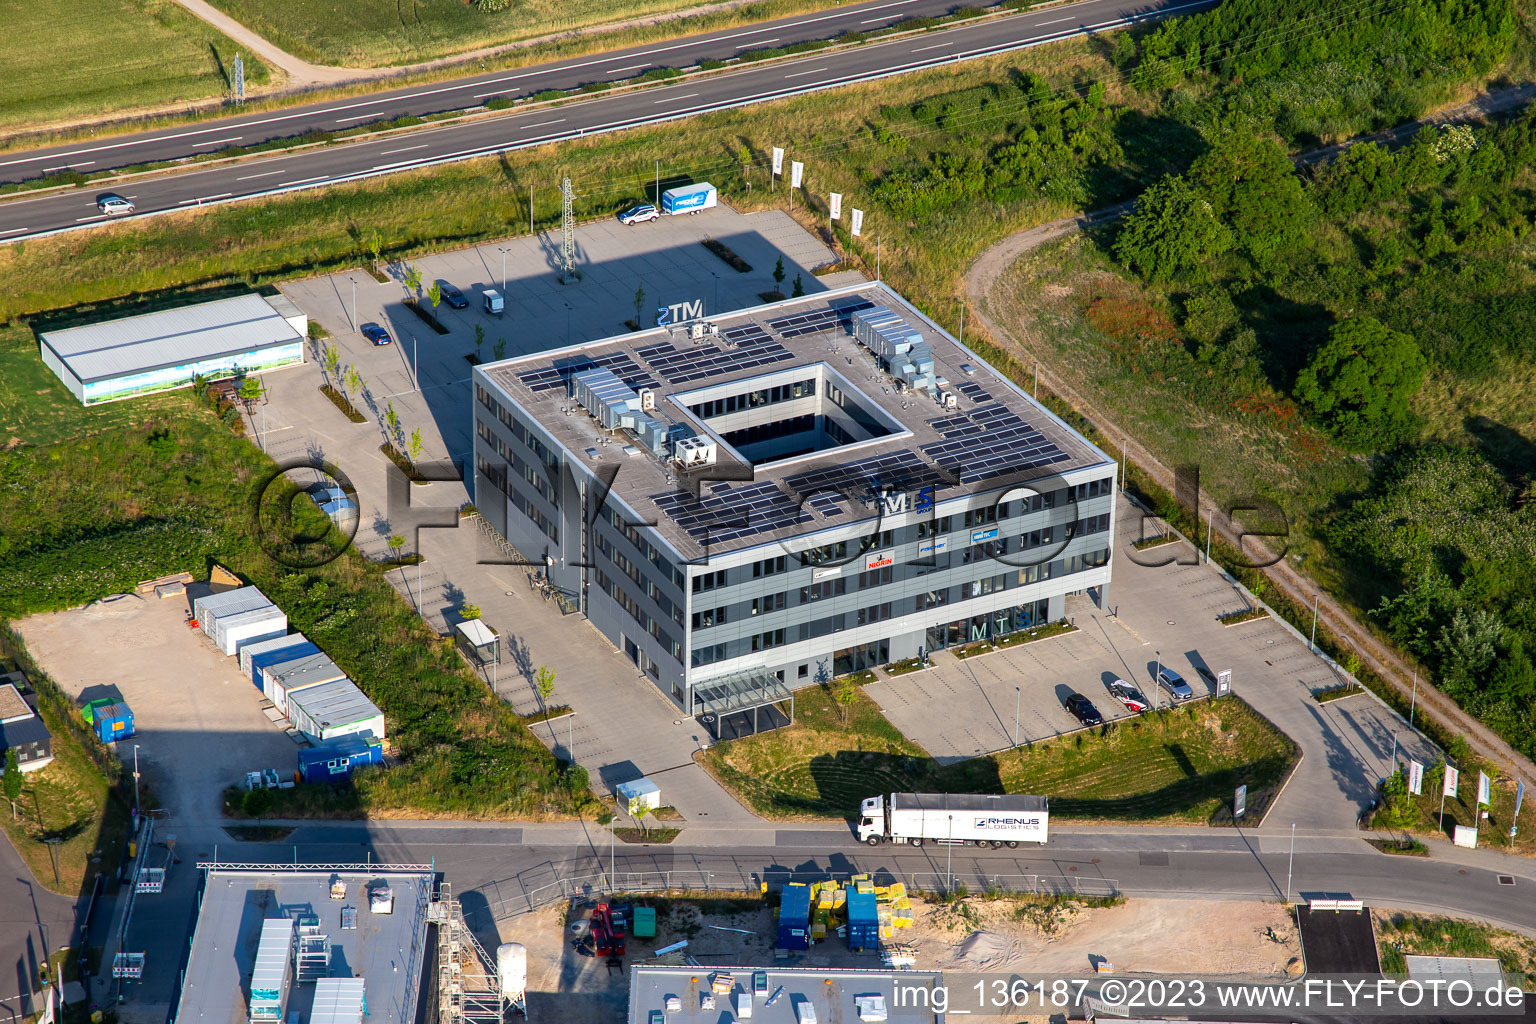 MTS MarkenTechnikService GmbH & Co. KG in Rülzheim in the state Rhineland-Palatinate, Germany